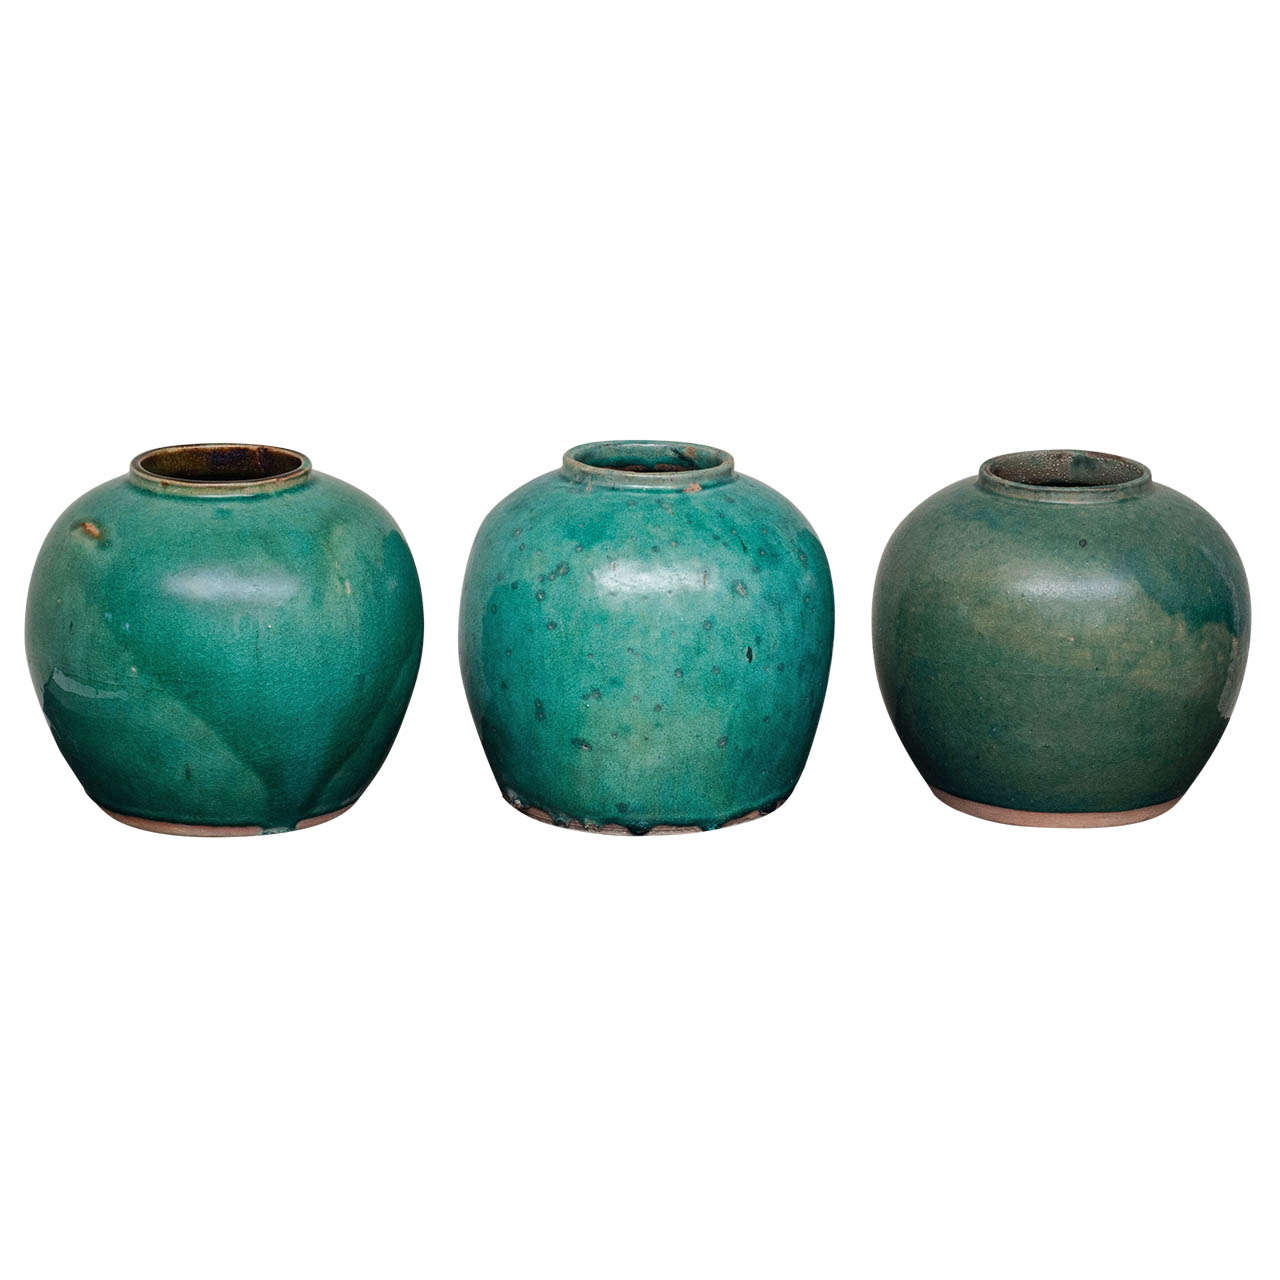 Chinese Green Glazed Ceramic Jars, 19th Century